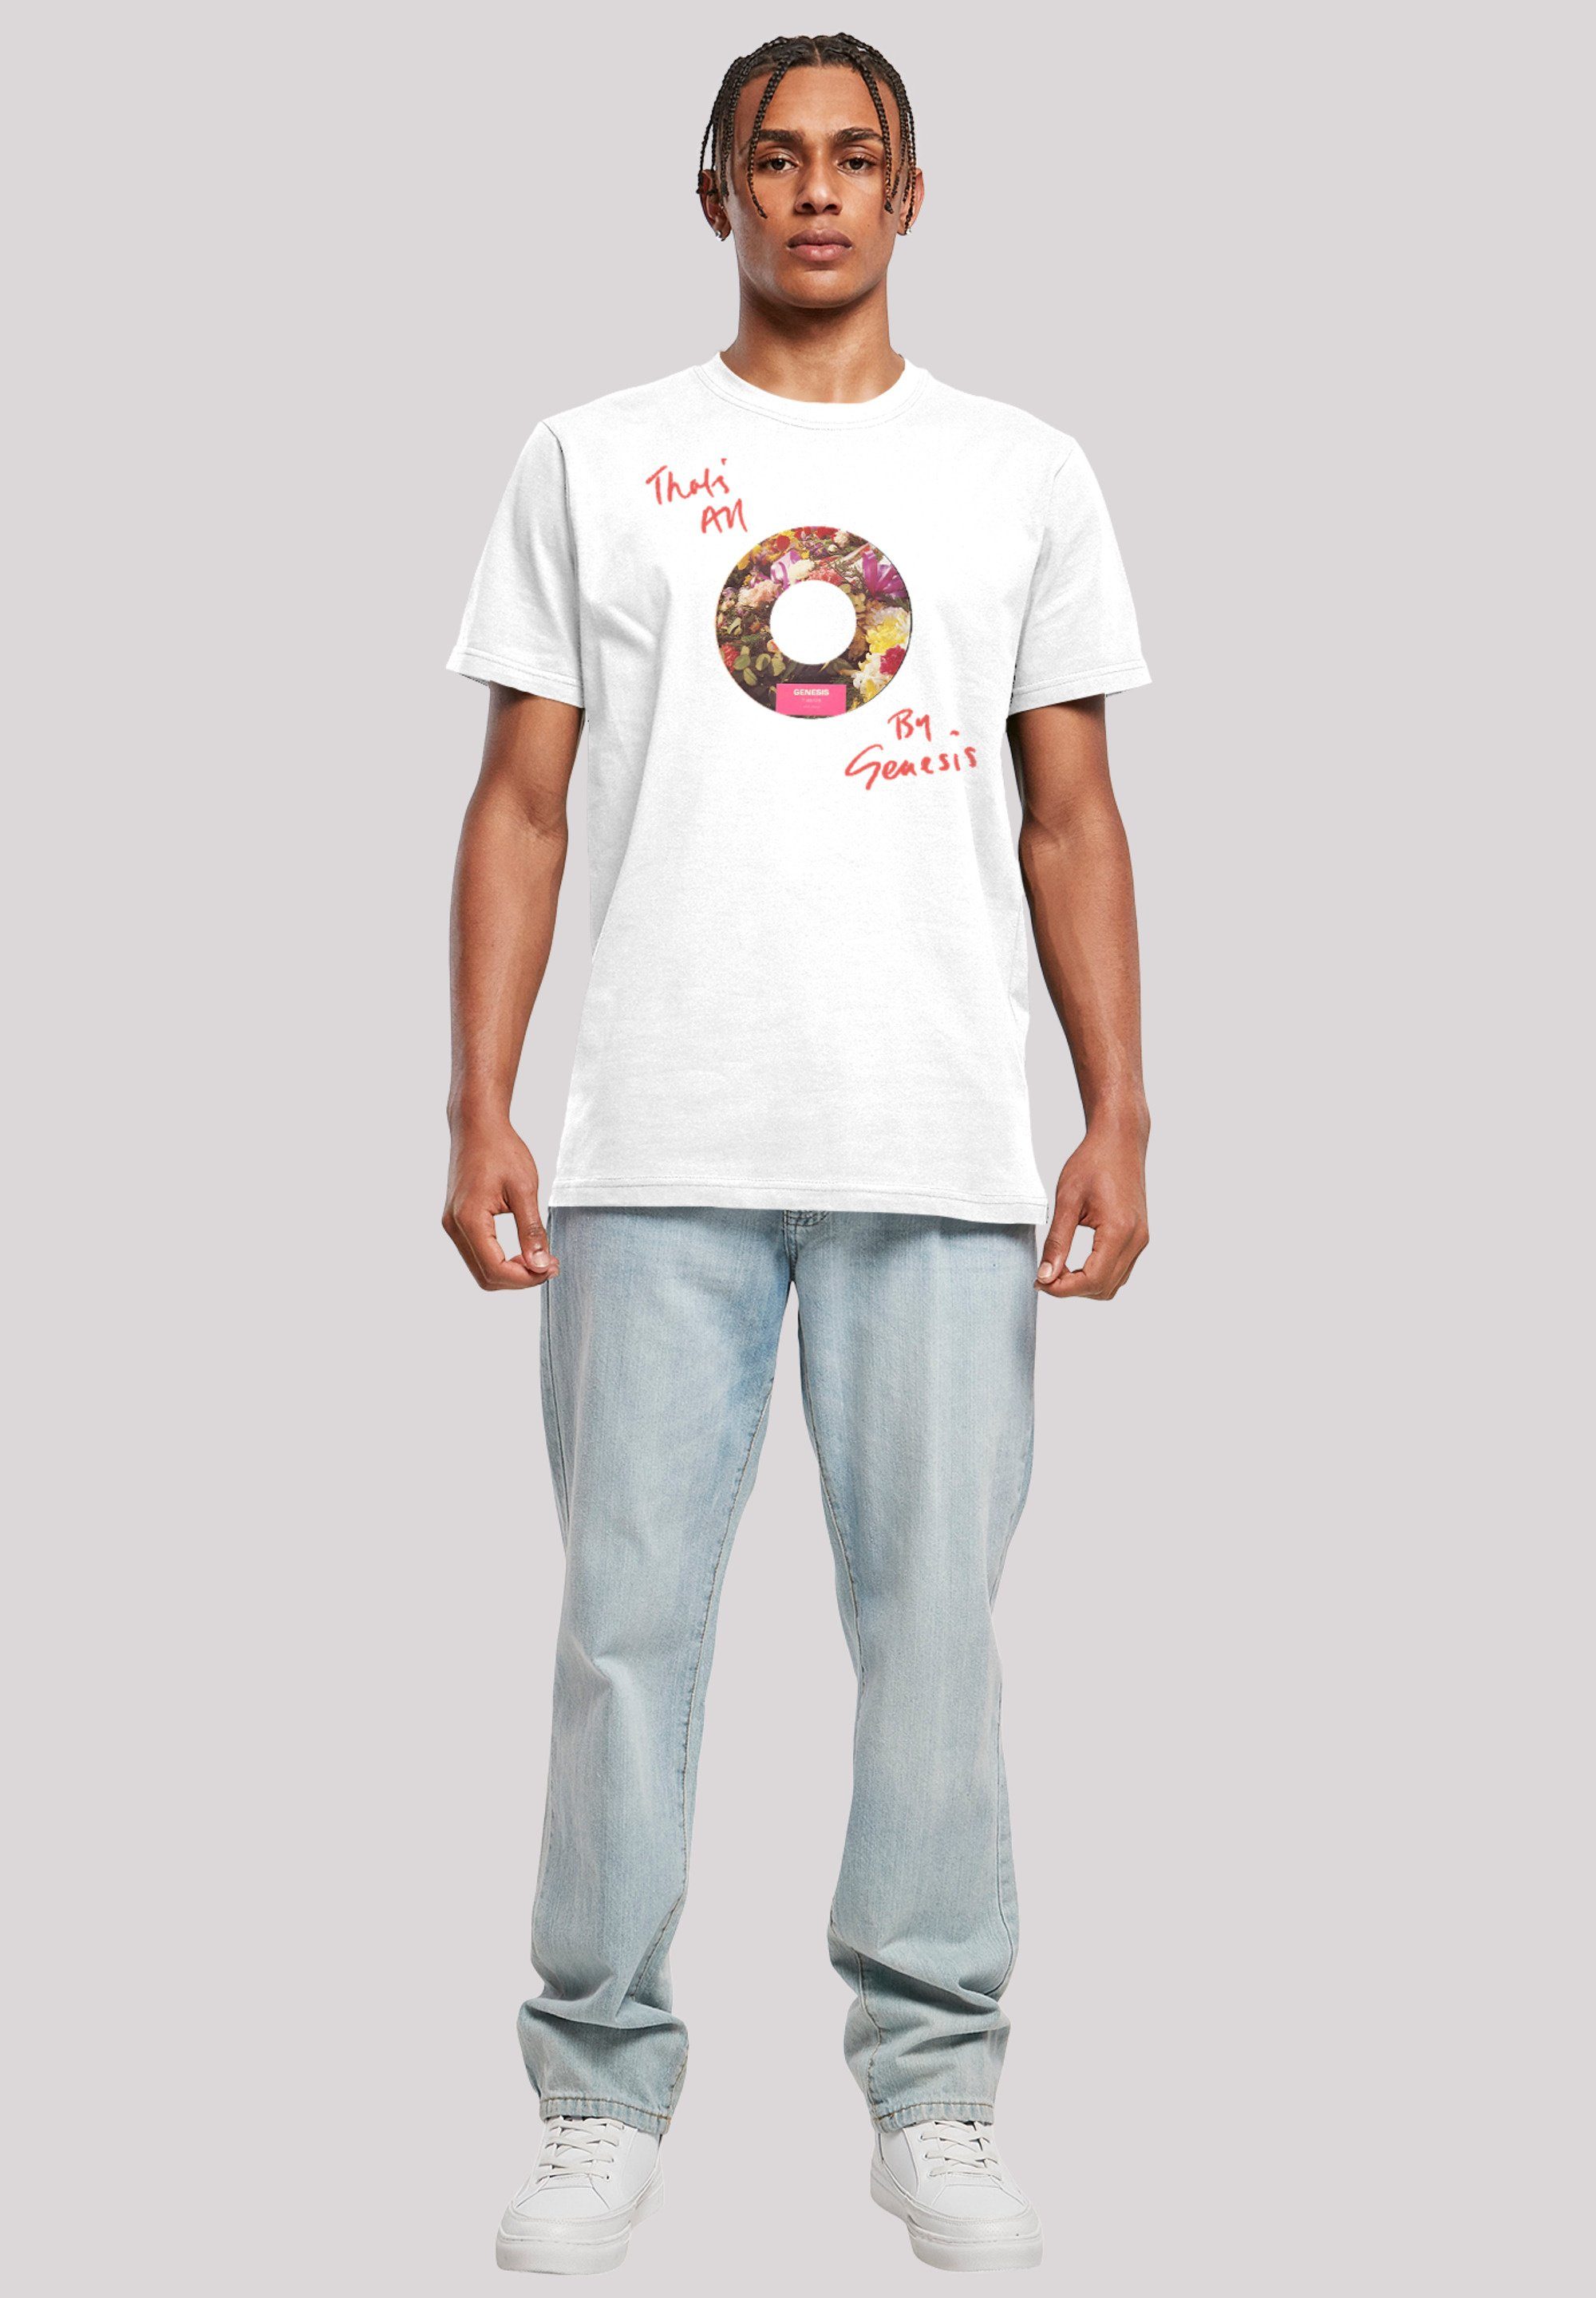 Herren,Premium Genesis T-Shirt 45 F4NT4STIC All weiß Merch,Regular-Fit,Basic,Bandshirt Rockband That's